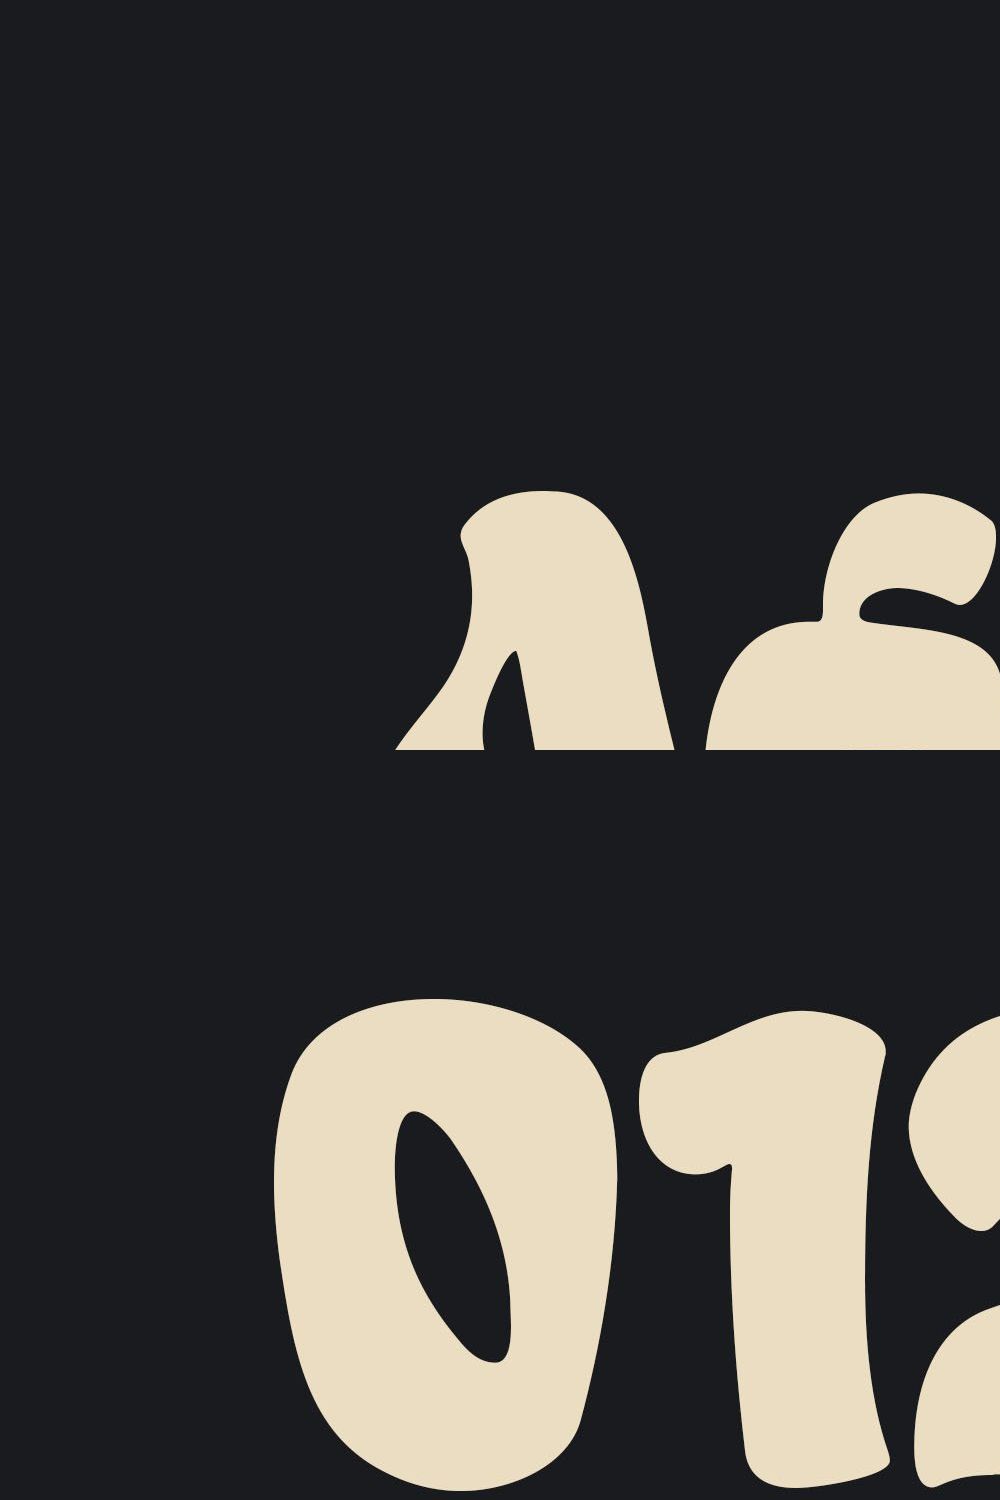 Aglest a Rounded Sans Serif Font pinterest preview image.